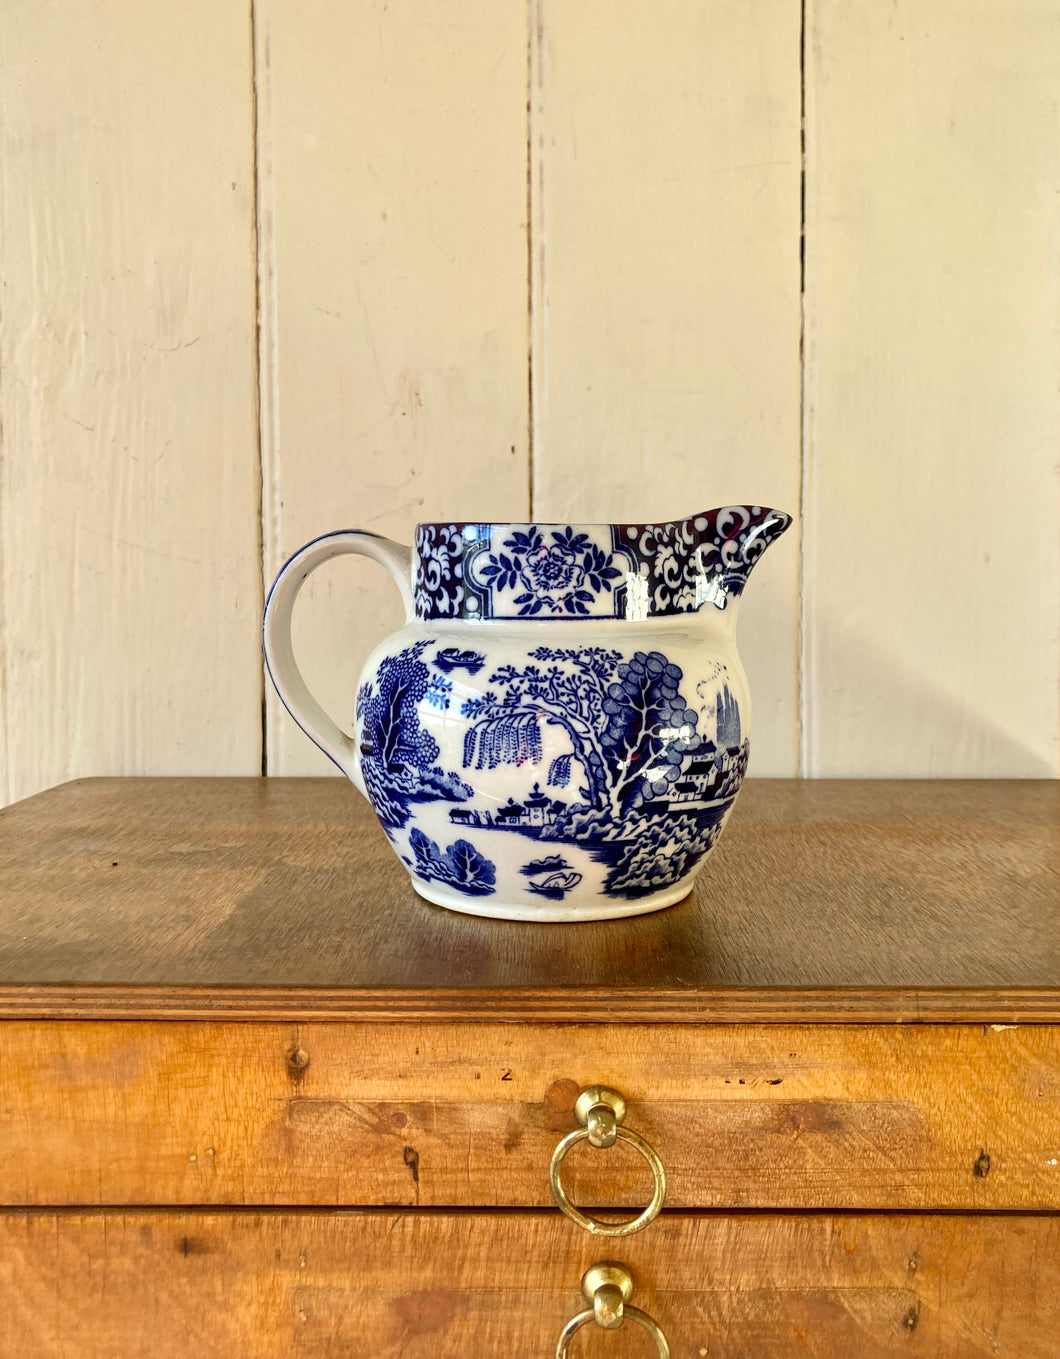 Green & Co. Ltd 'Ming' design blue and white jug